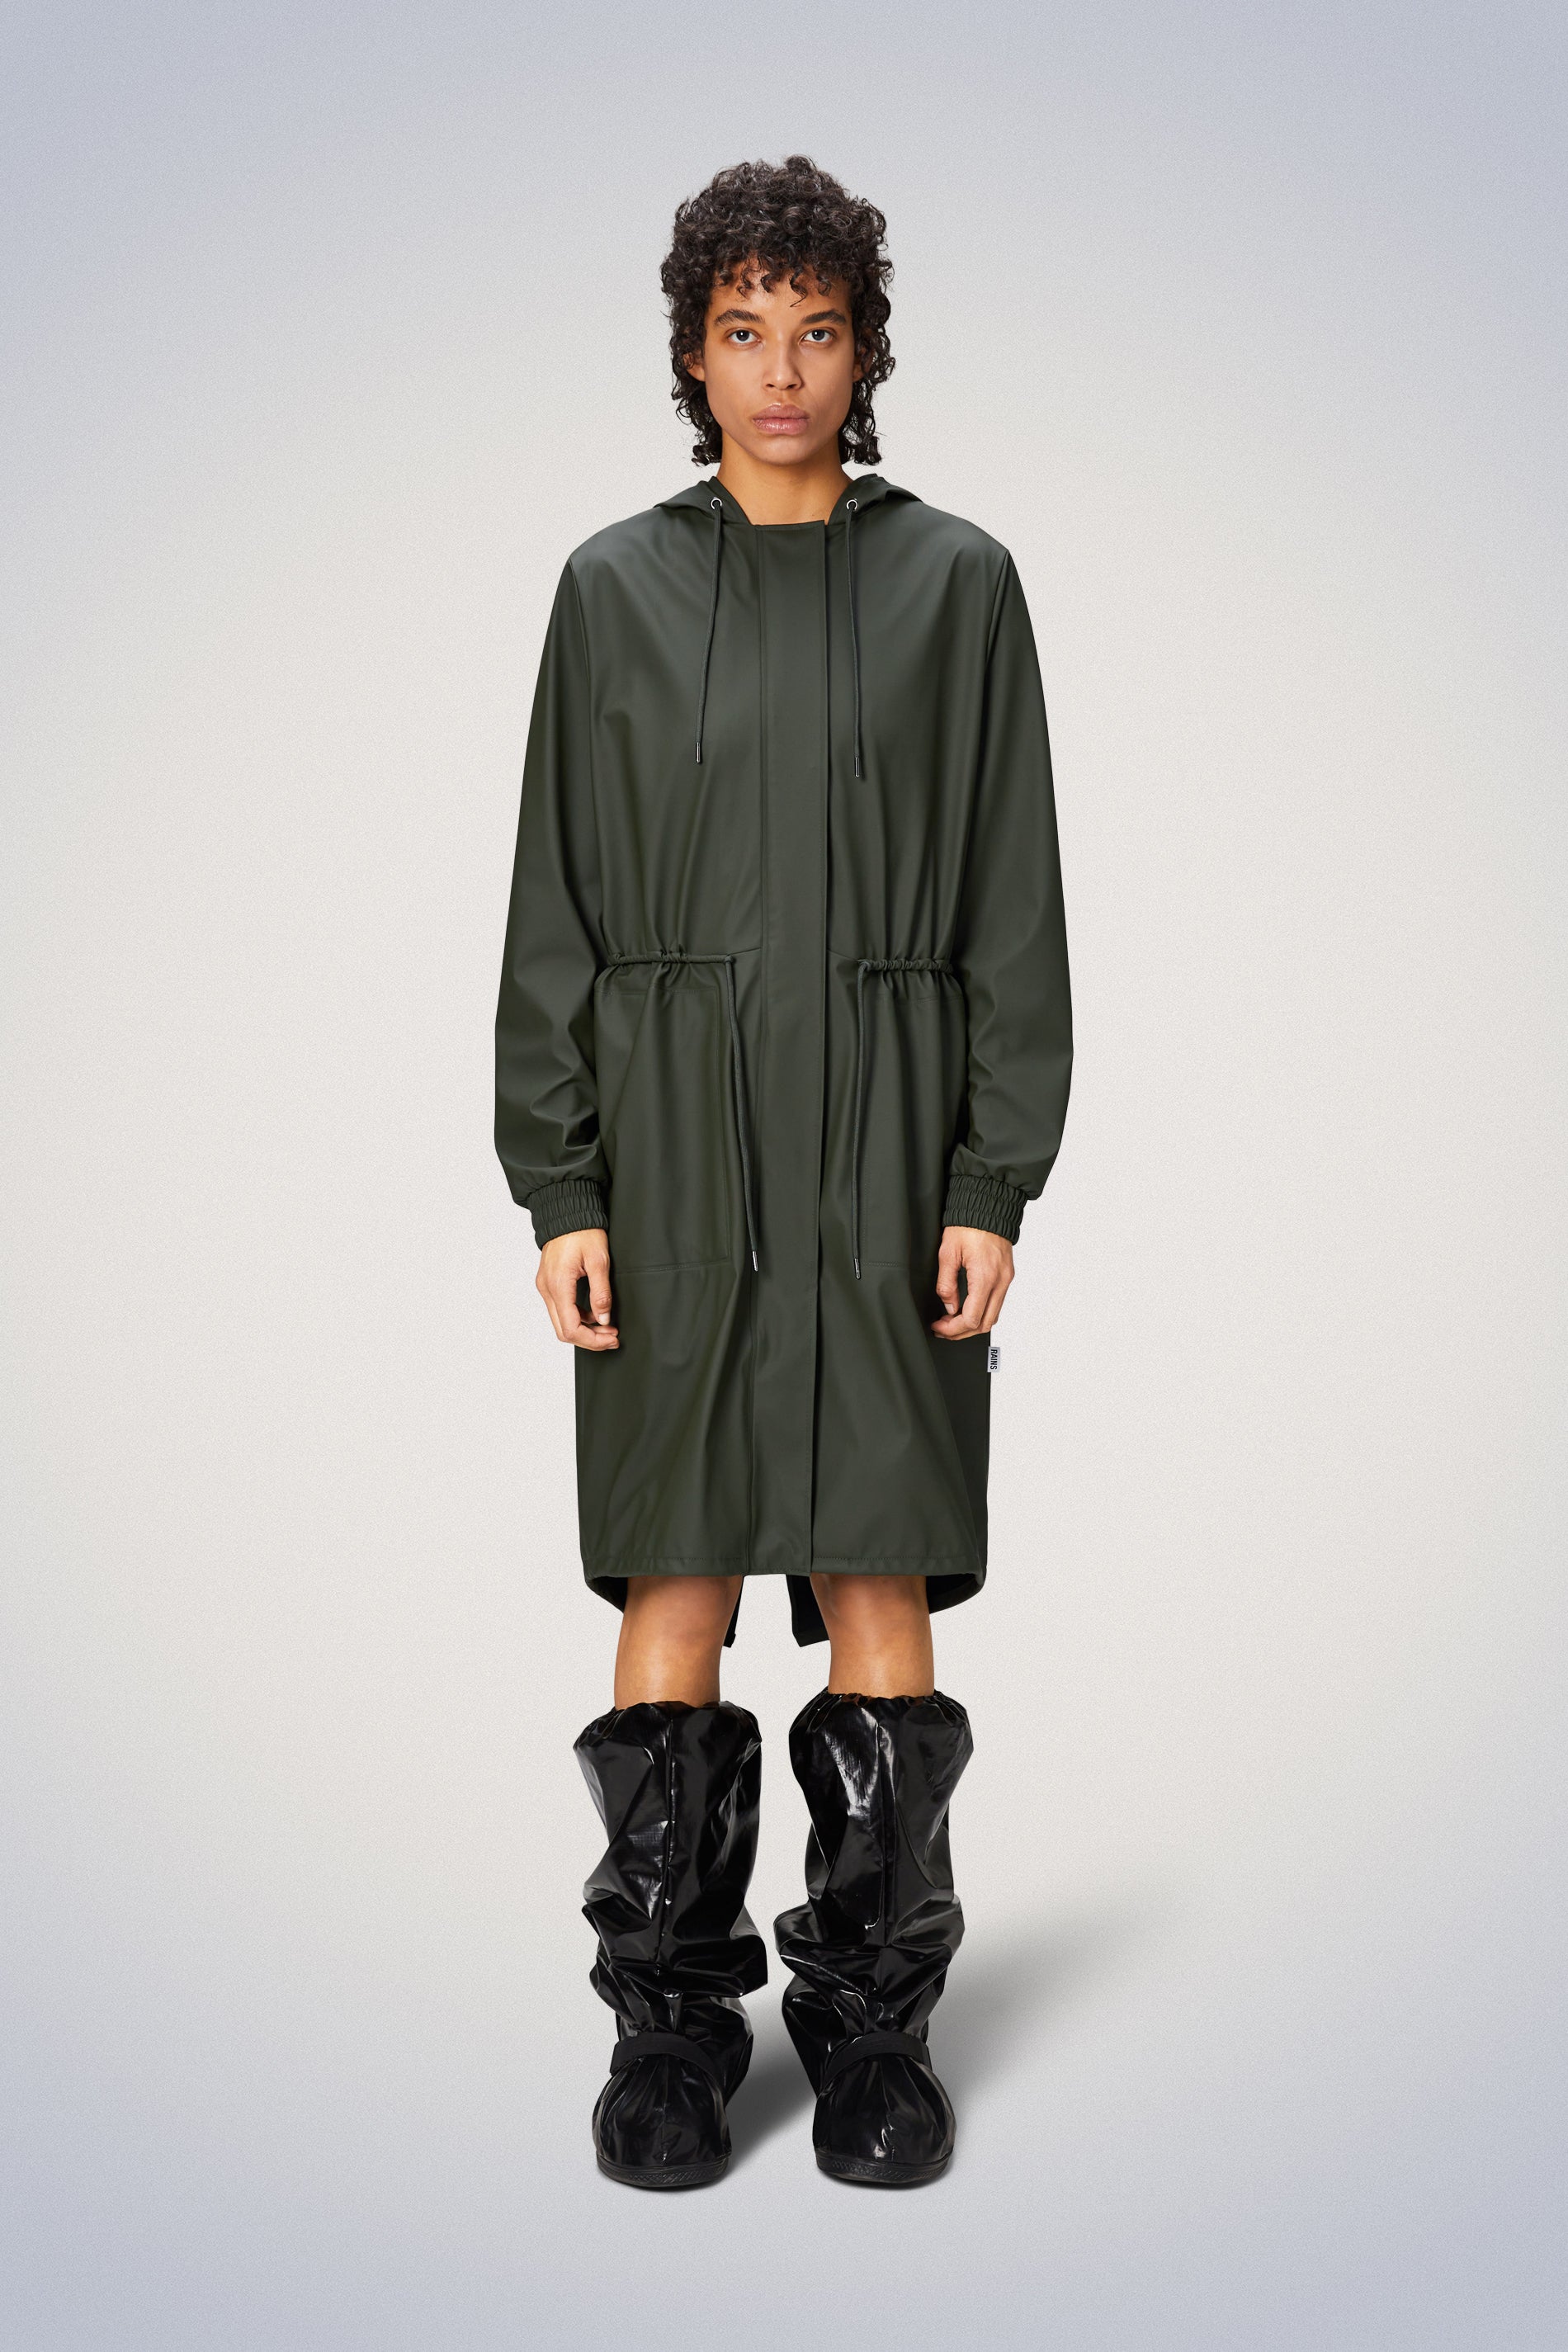 Raingear for Buy Women Outfits Rains® & for | Rainwear | Women